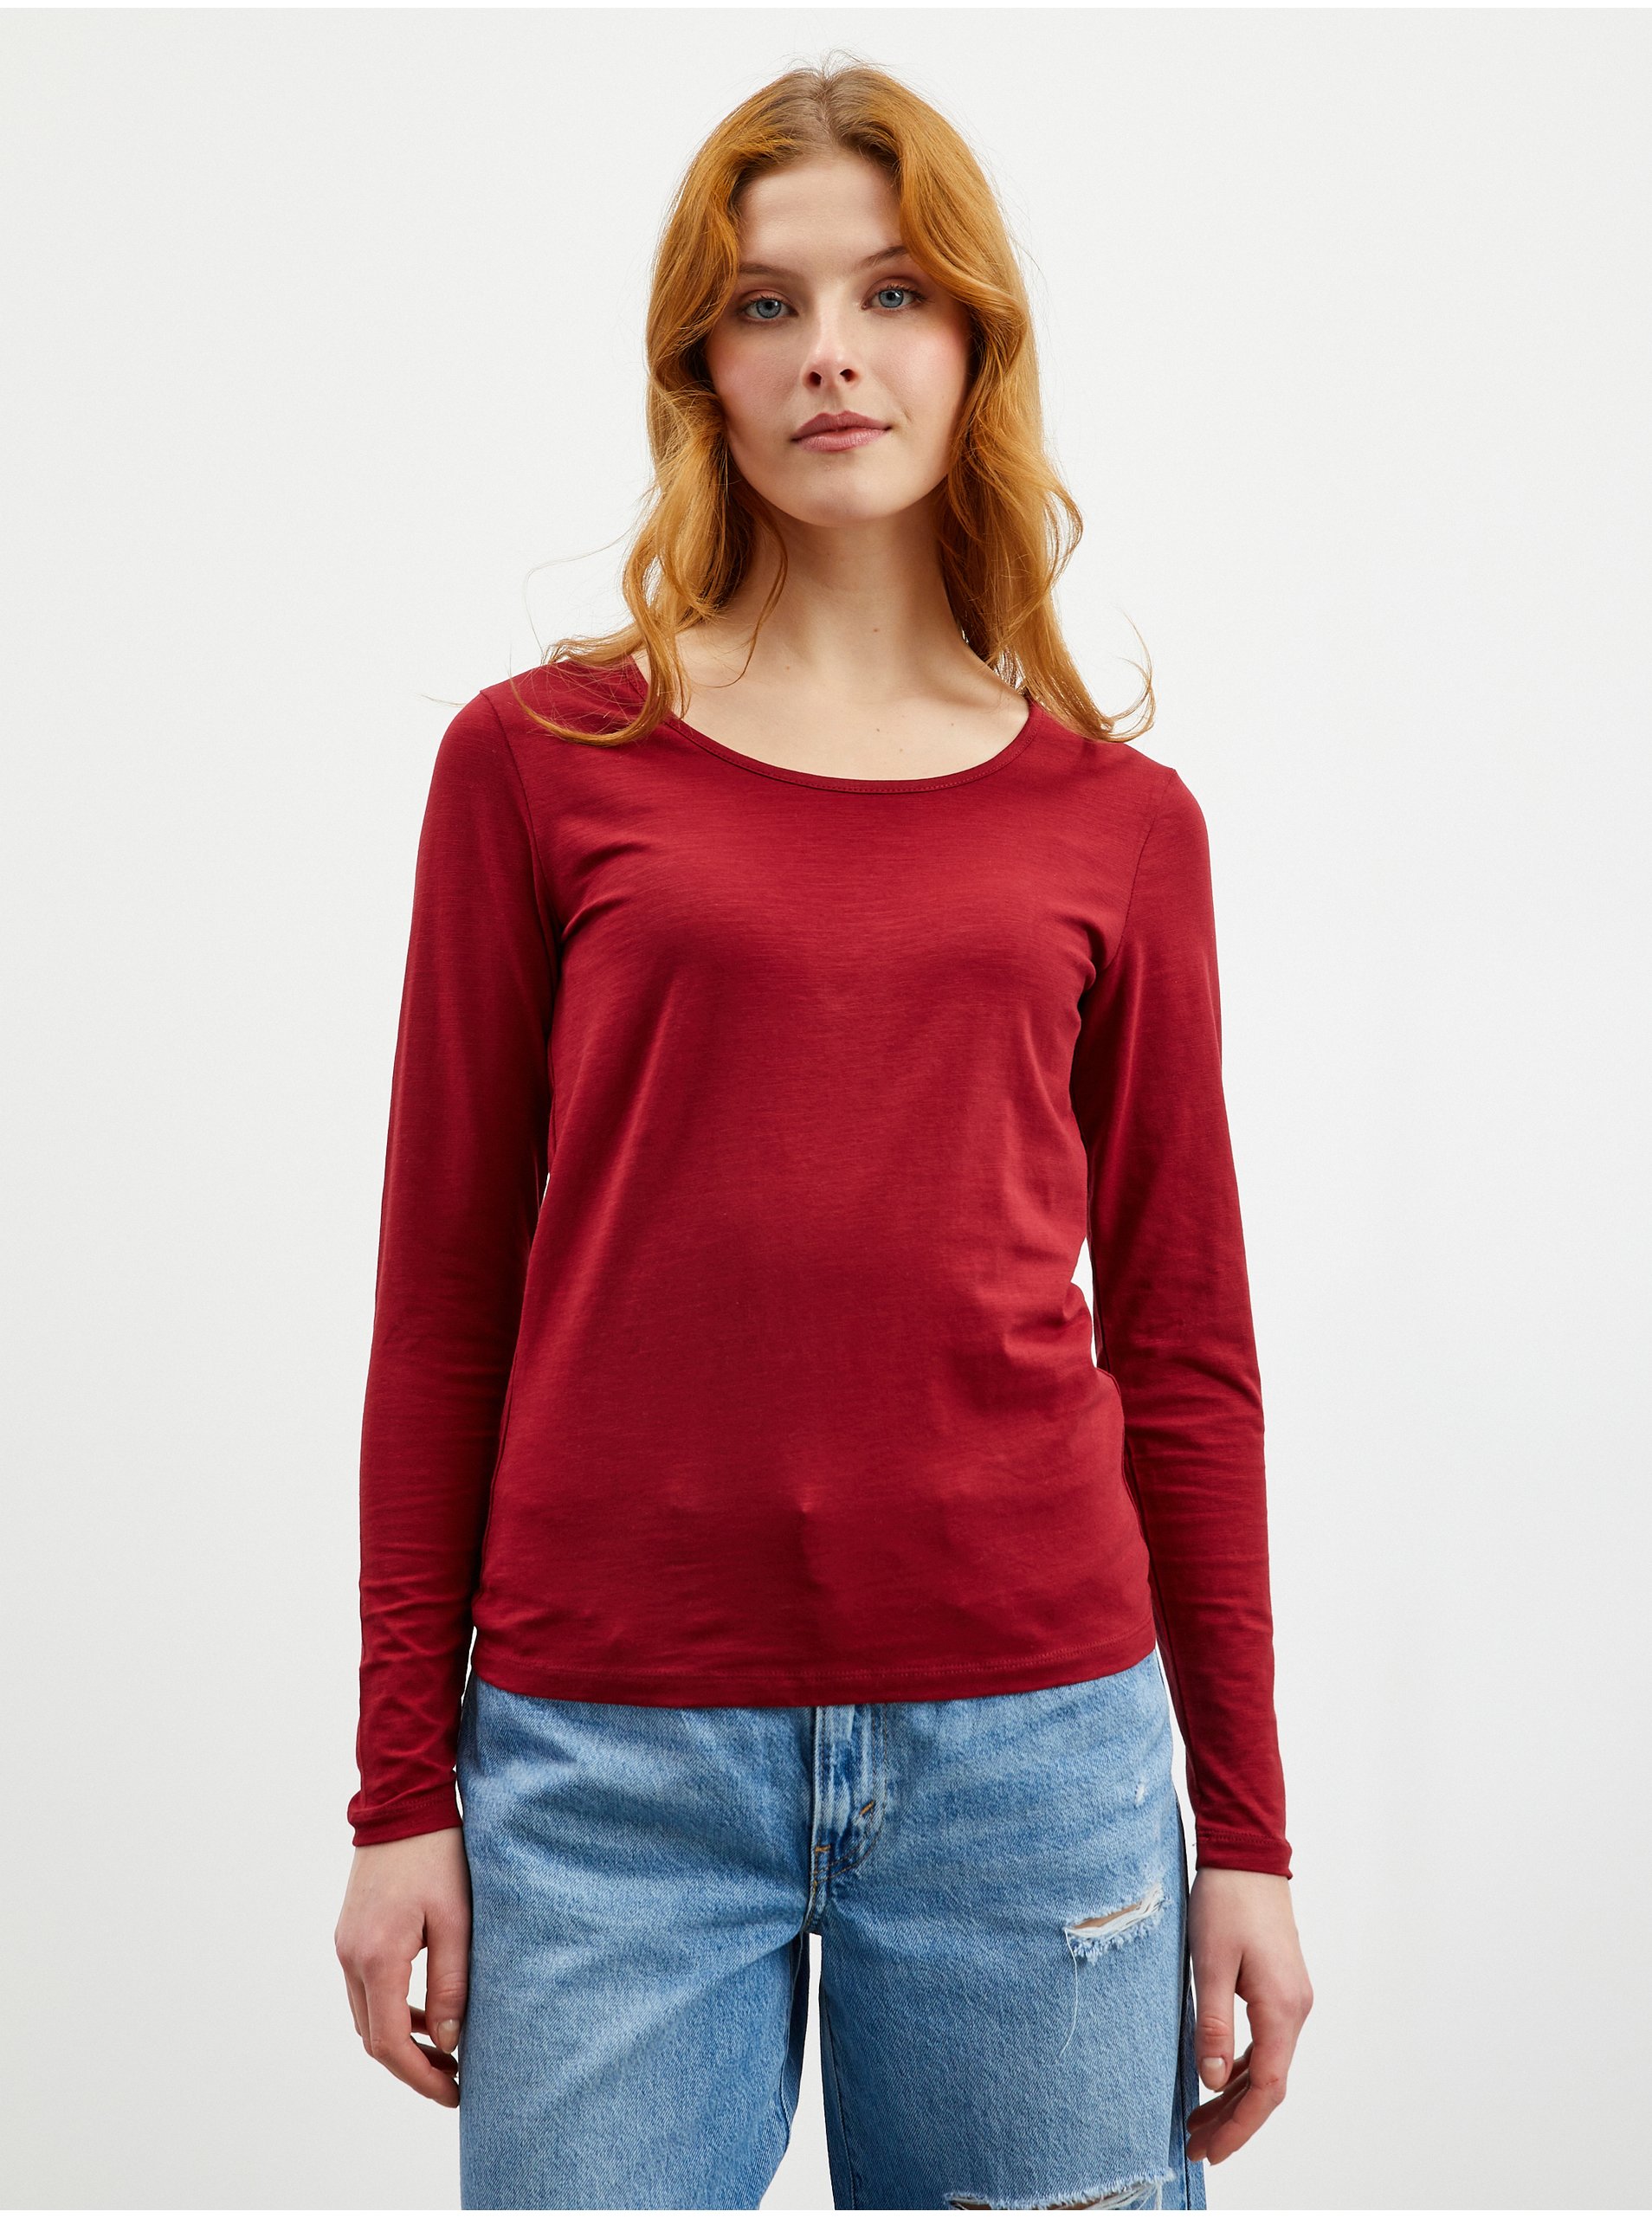 Lacno Topy a tričká pre ženy ZOOT Baseline - červená